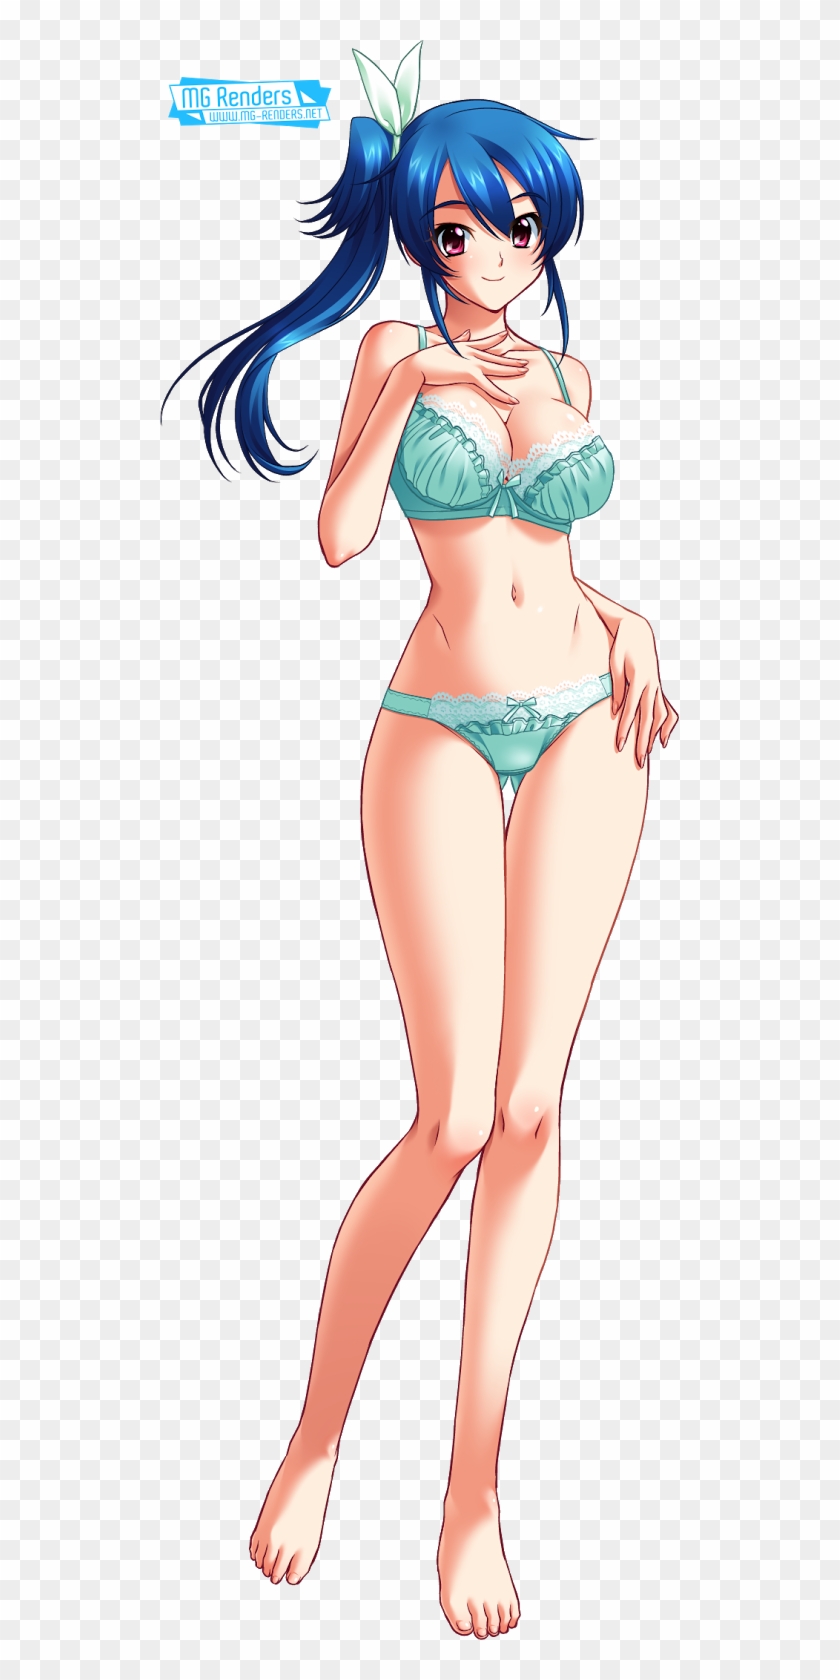 Anime Render Ecchi Transparent Background Barefoot - Barefoot Anime Girl Render #788283